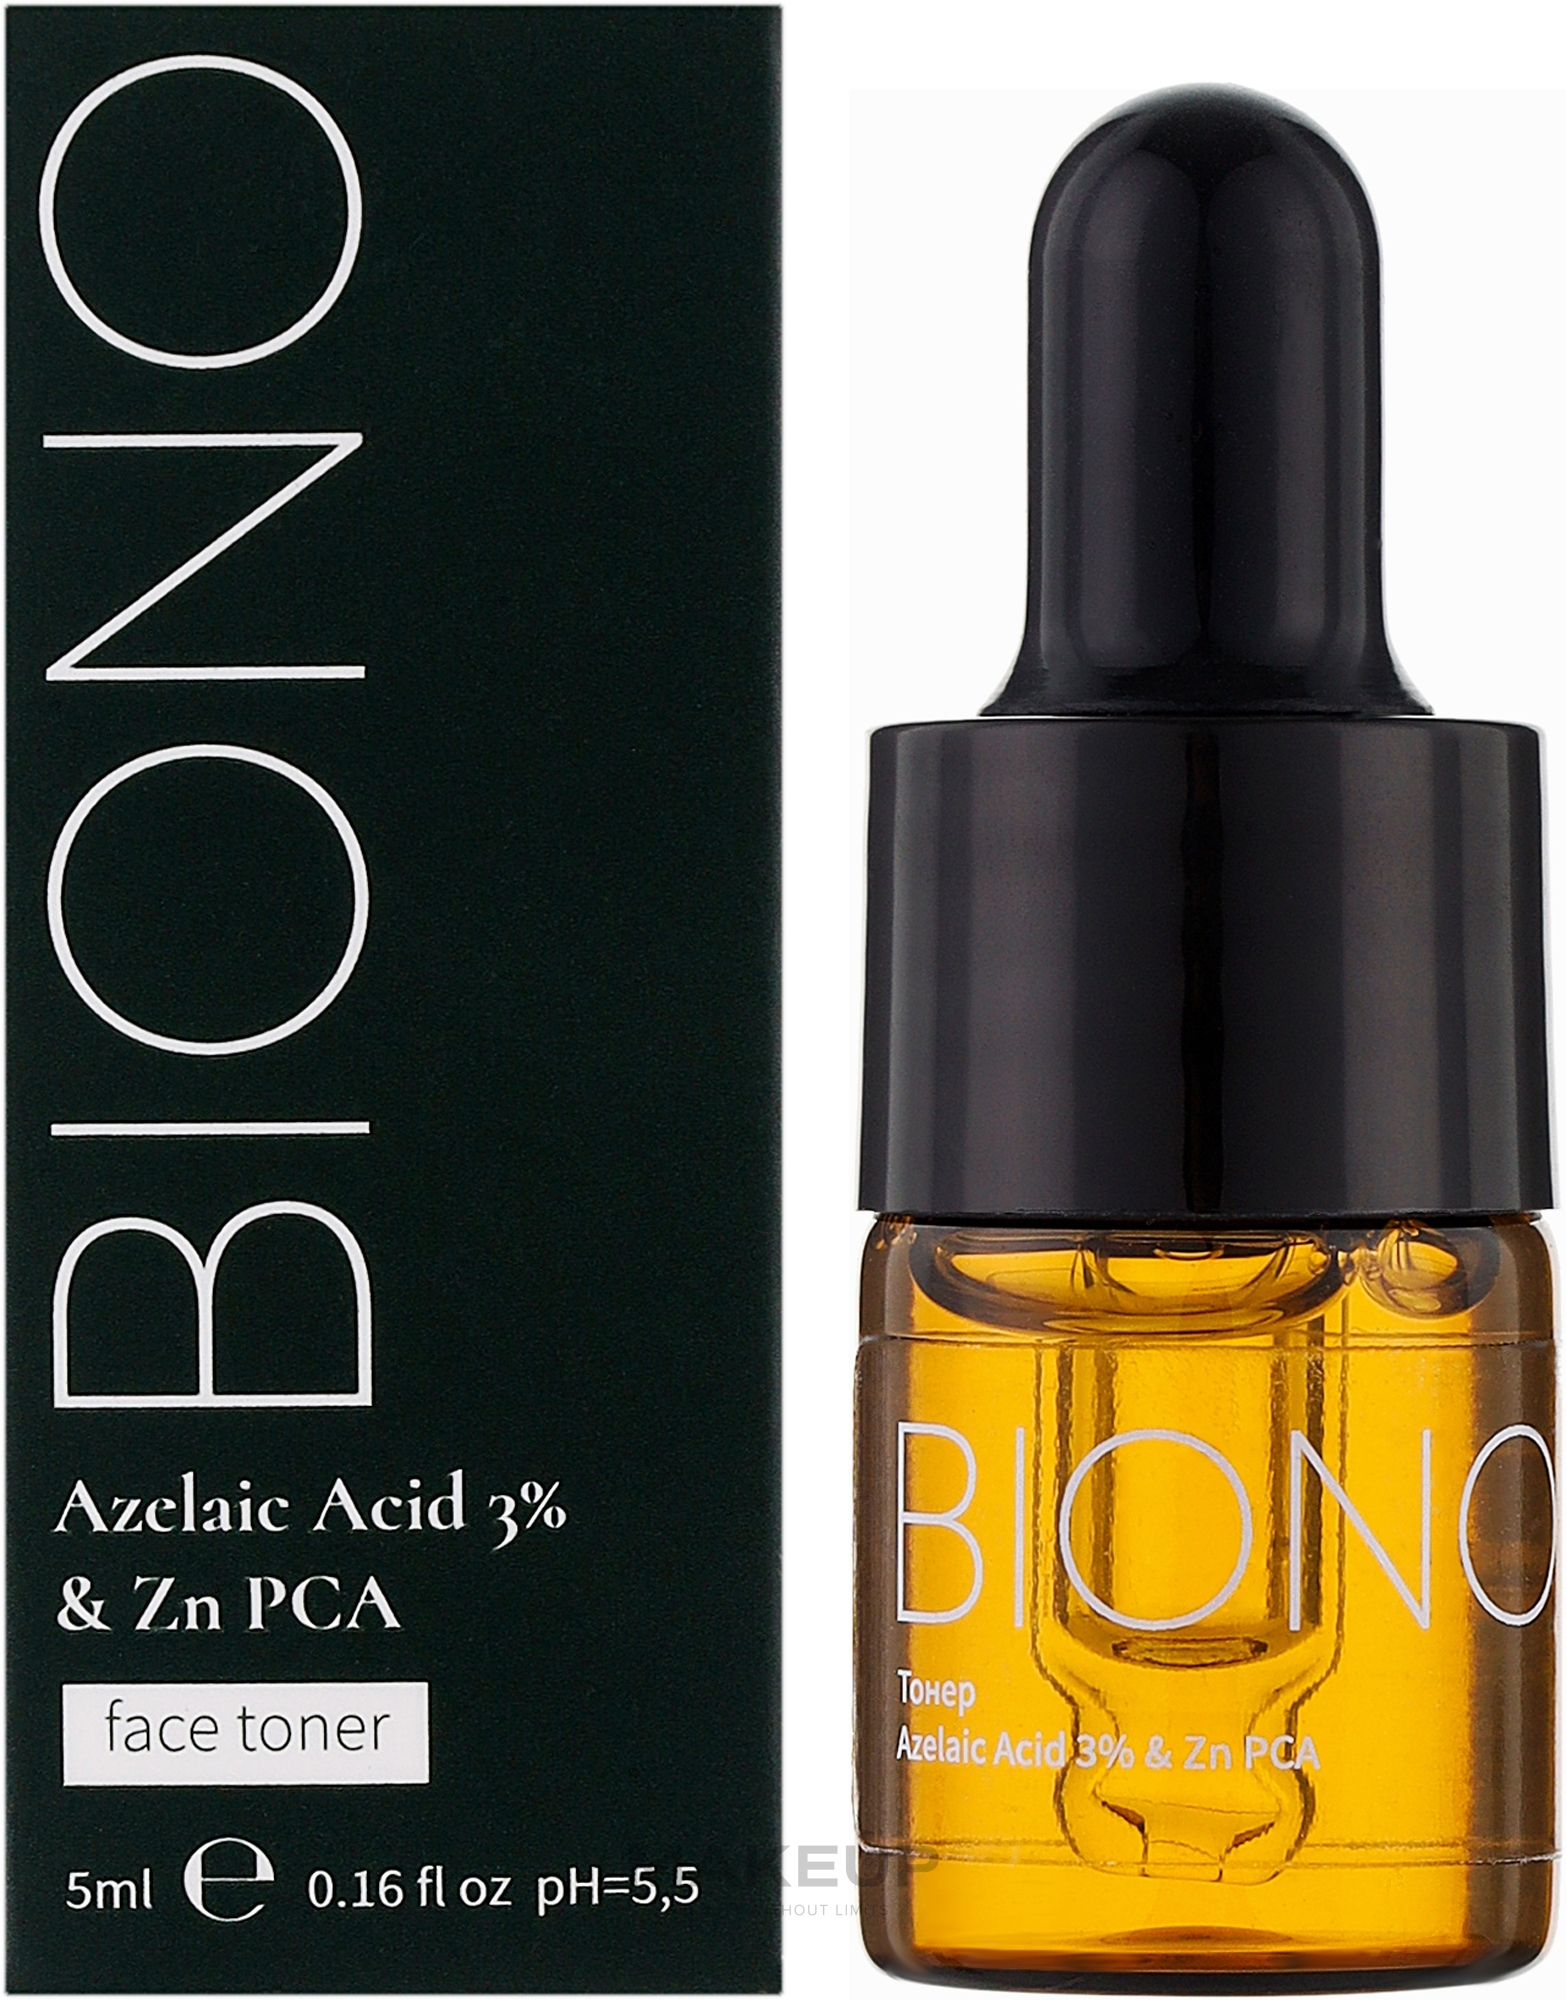 Тонер для лица с азелаиновой кислотой 3% - Biono Azelaic Acid 3% & Zn PCA Face Toner (пробник) — фото 5ml